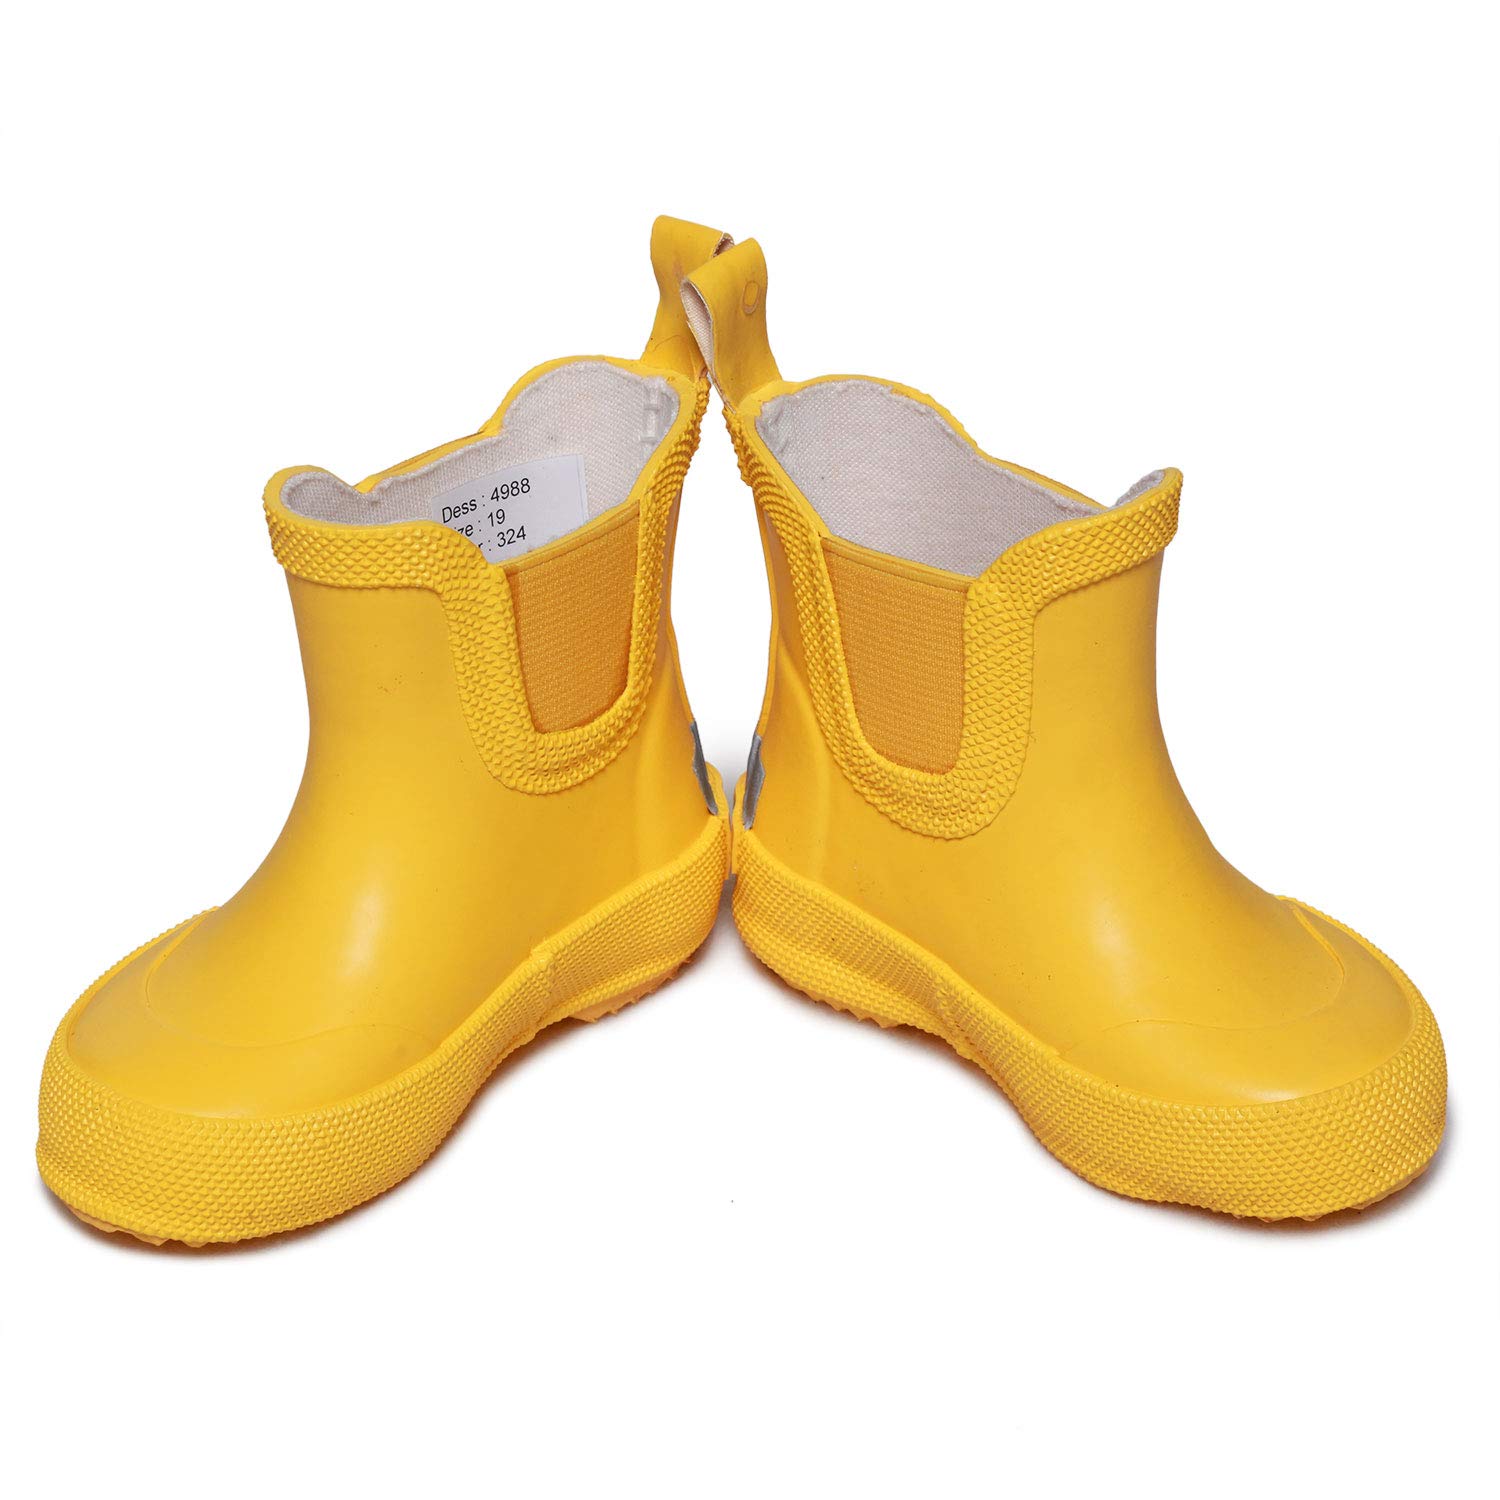 CeLaVi Unisex-Child Basic Wellies Short Rain Boot, Gelb, 25 EU